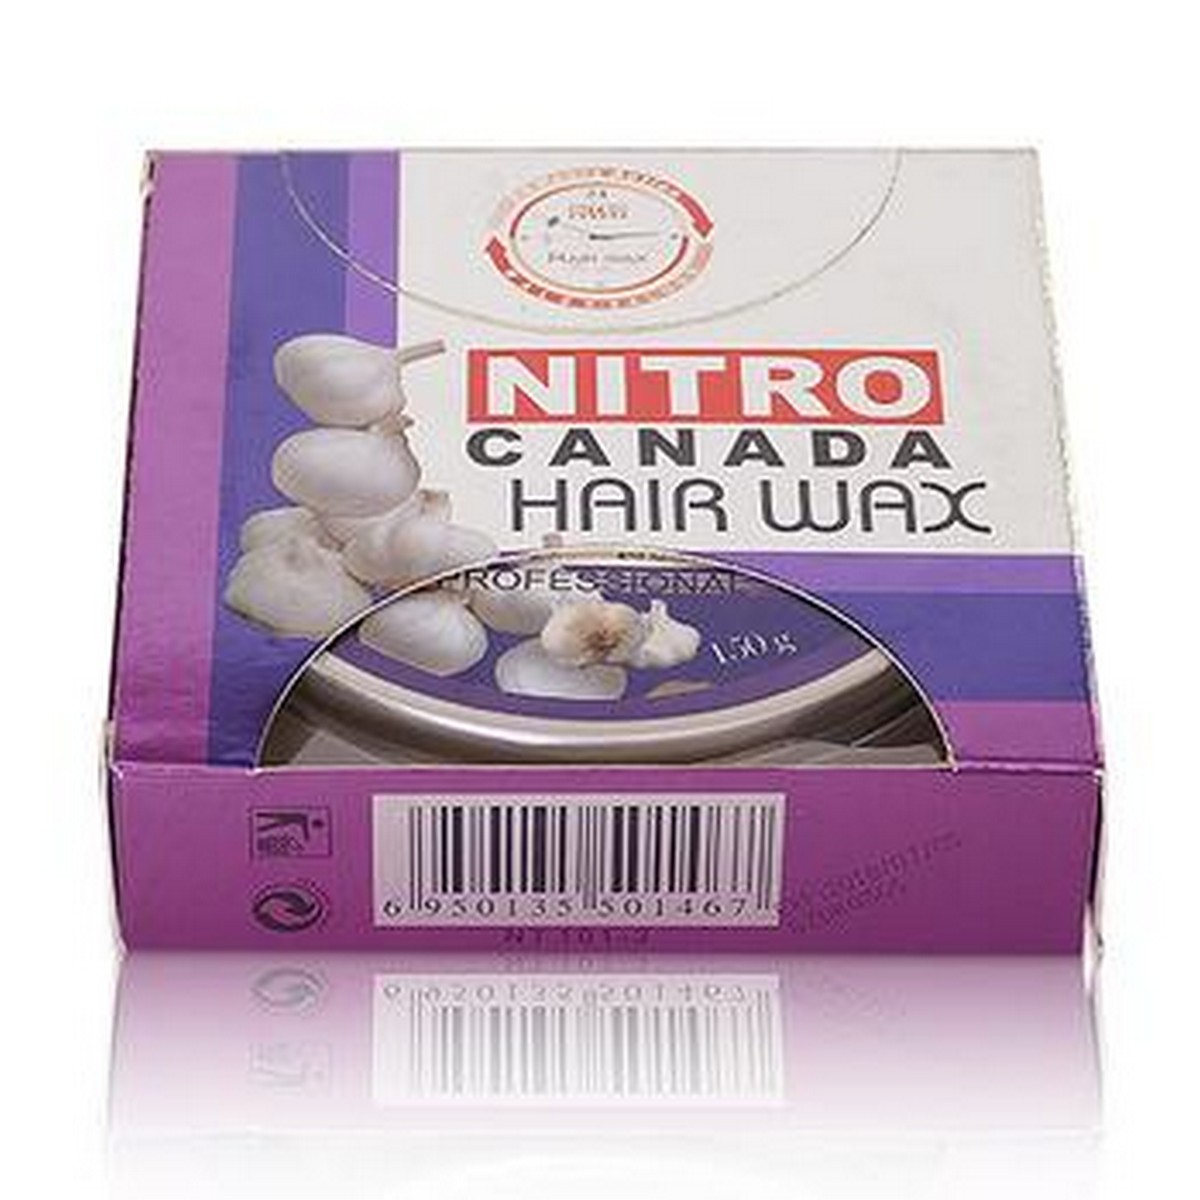 Nitro Professional Hair Wax With Garlic